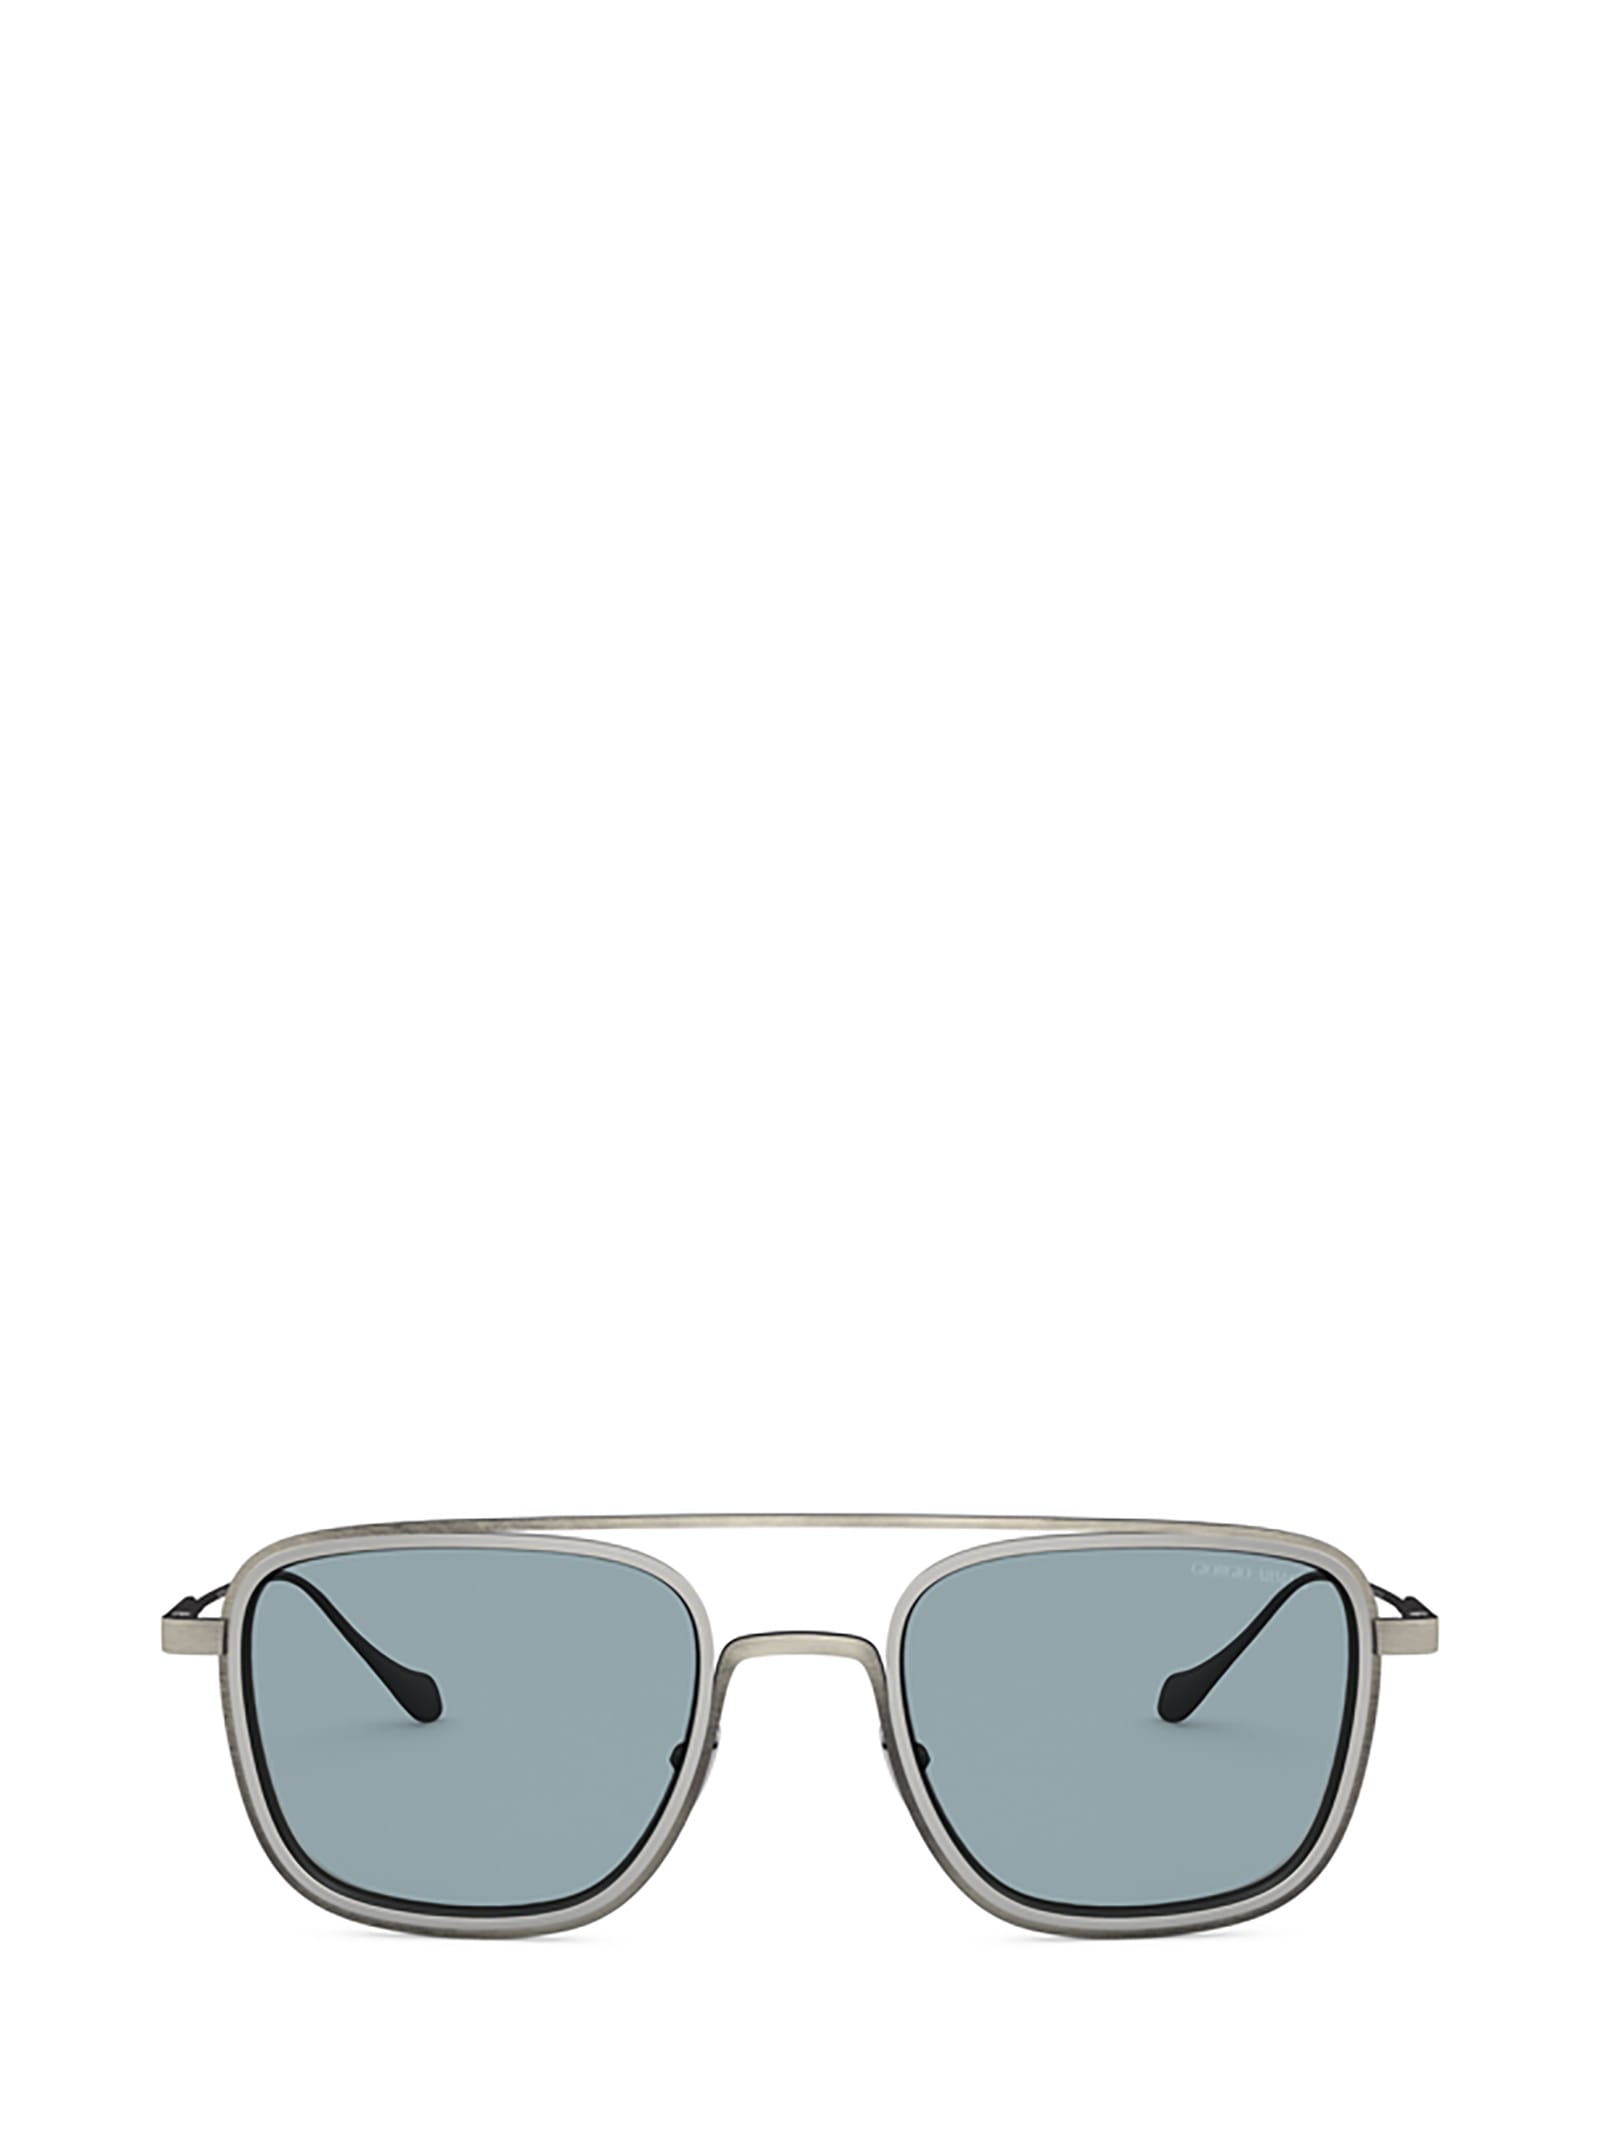 Giorgio Armani Giorgio Armani Ar6086 Brushed Grey / Matte Silver Sunglasses